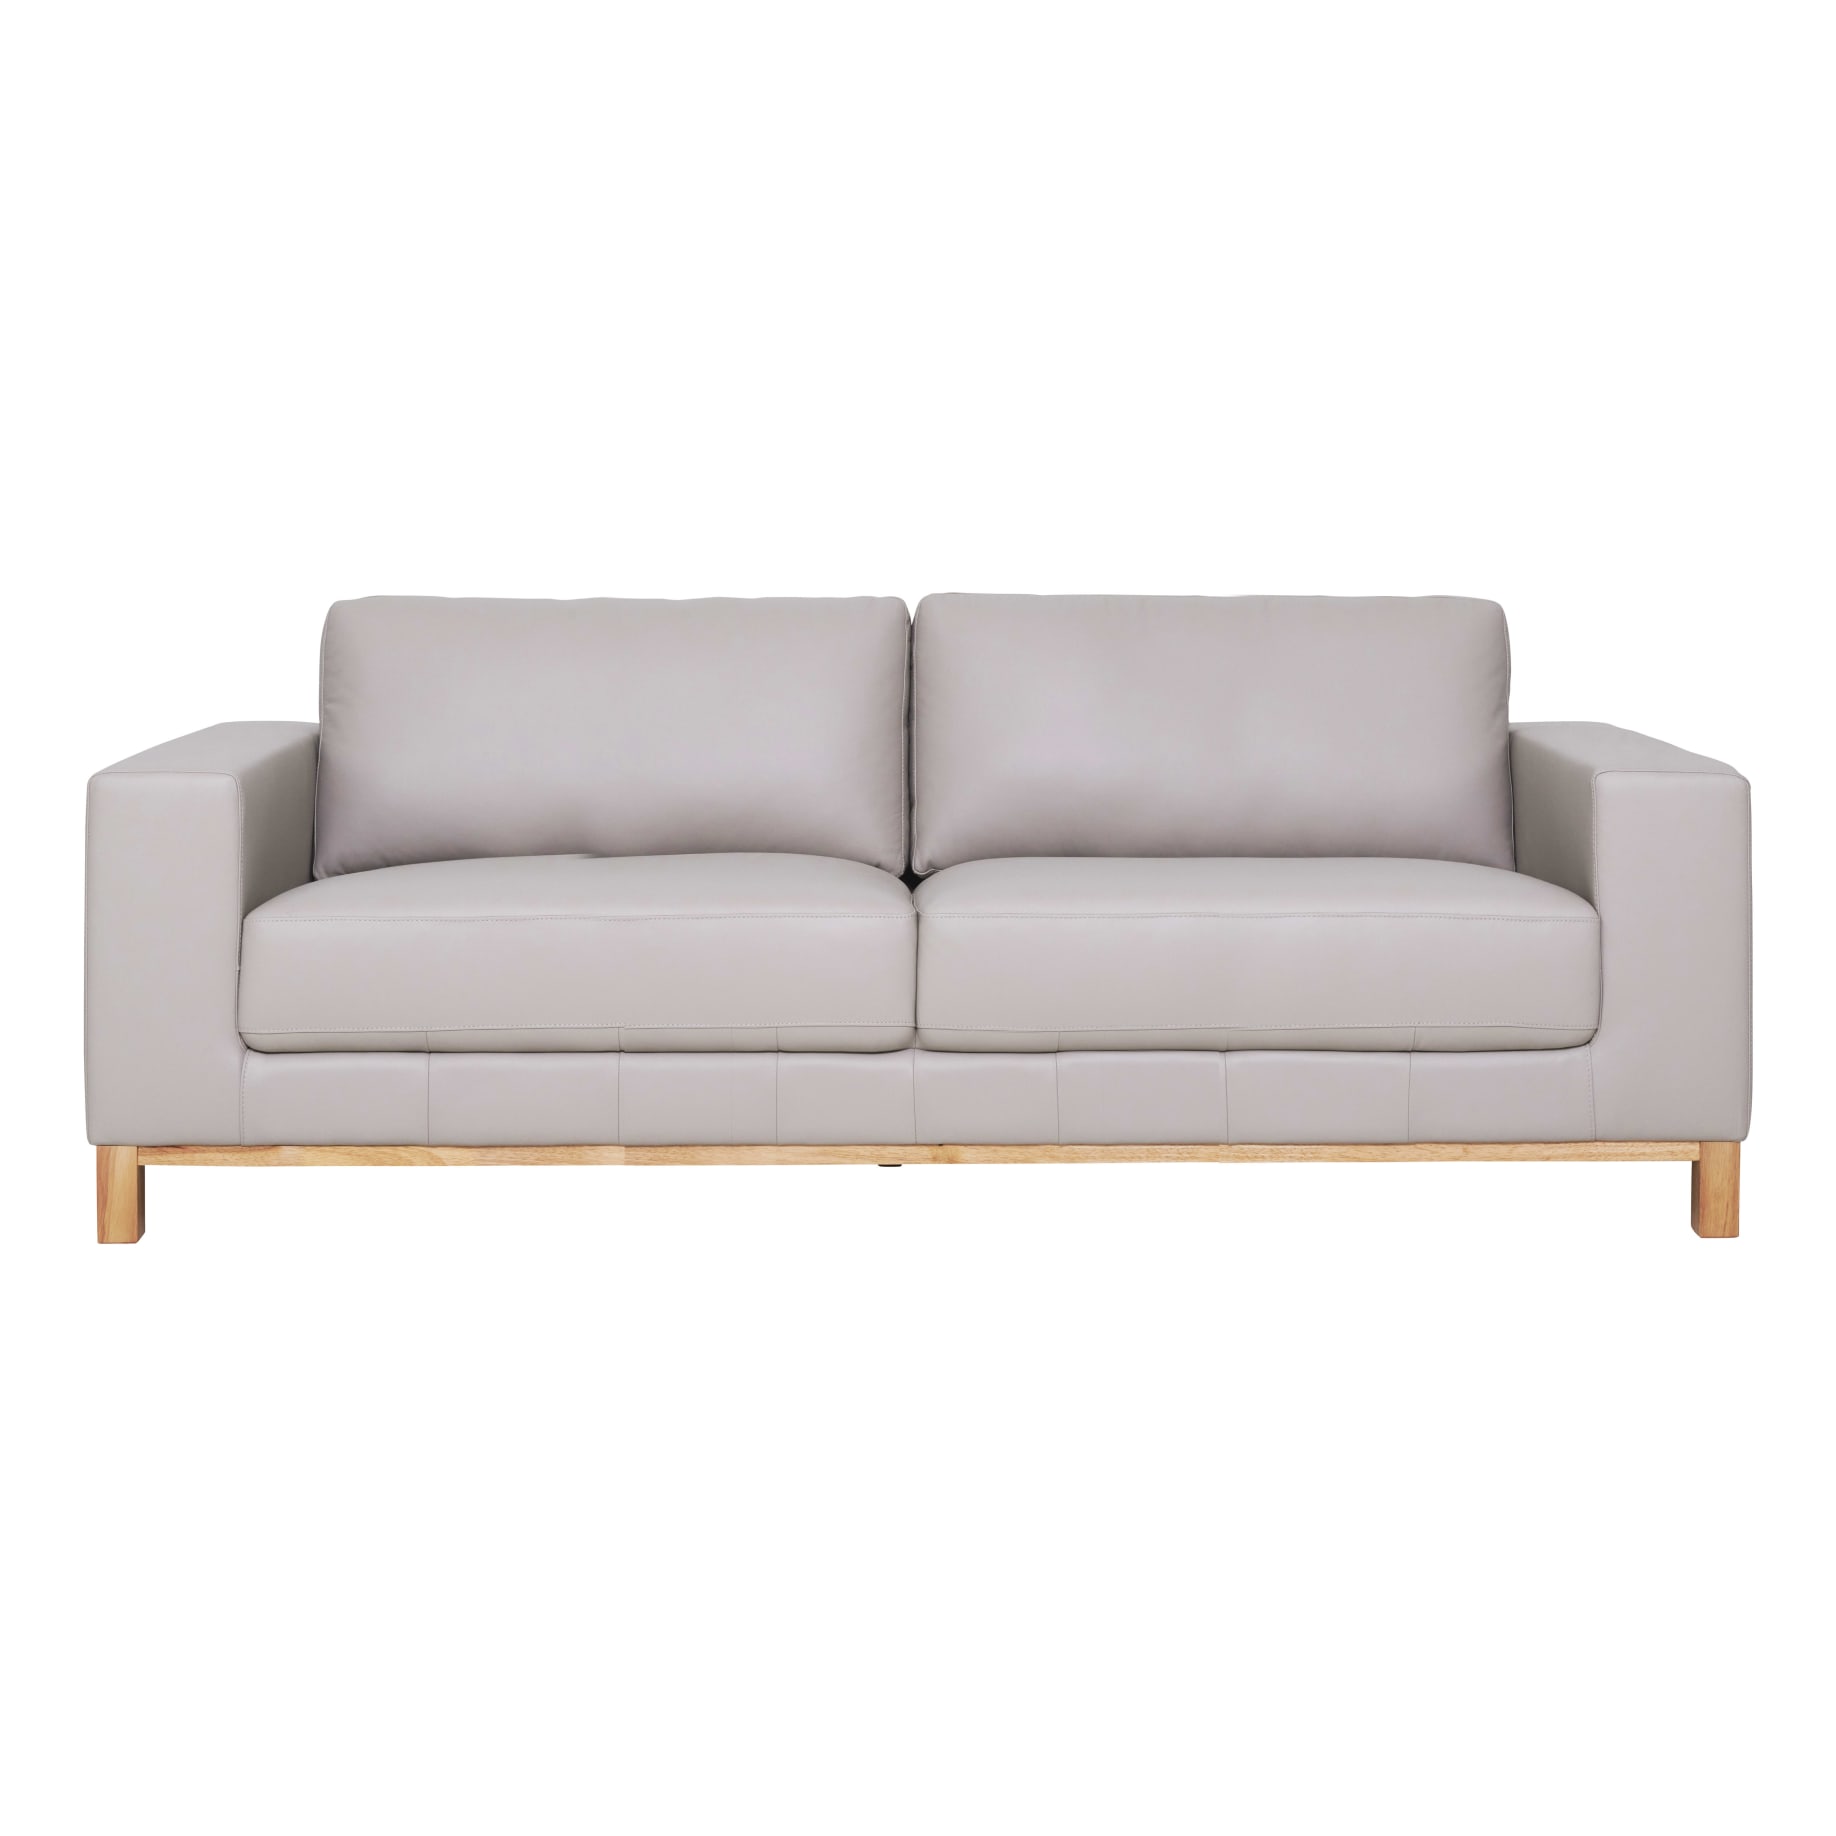 Jasper 3 Seater Sofa in Linea Leather Light Grey